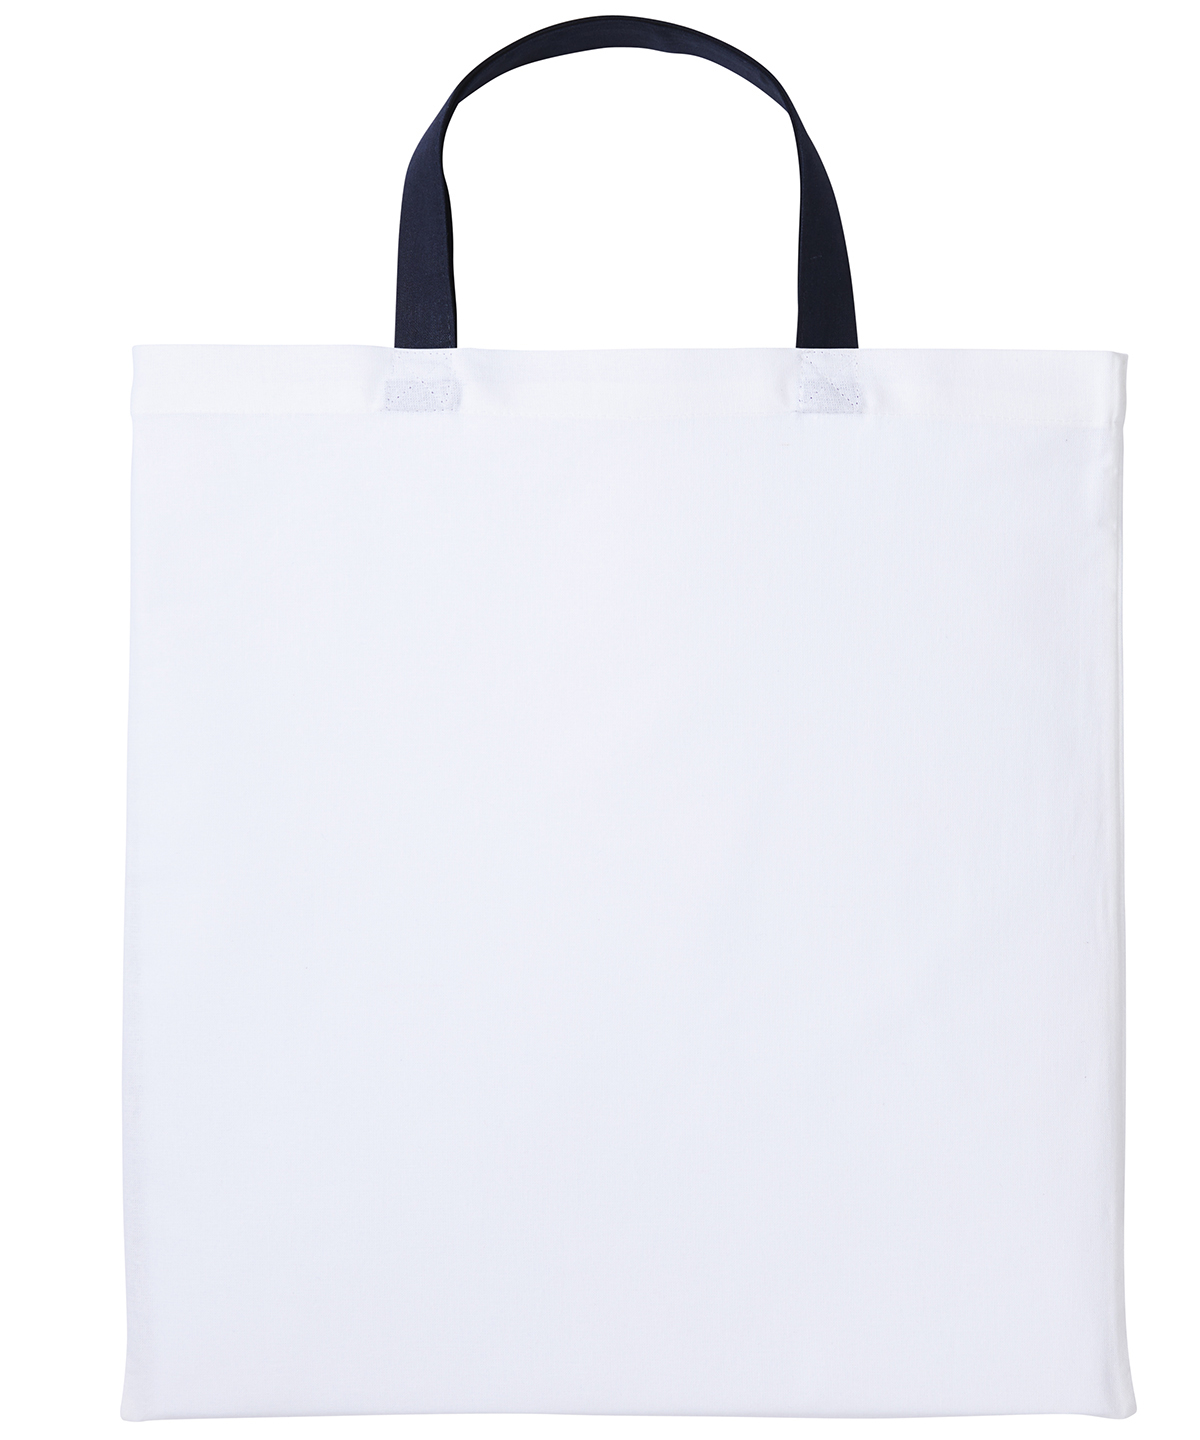 Nutshell - One-Handle Tote Bag - RL400